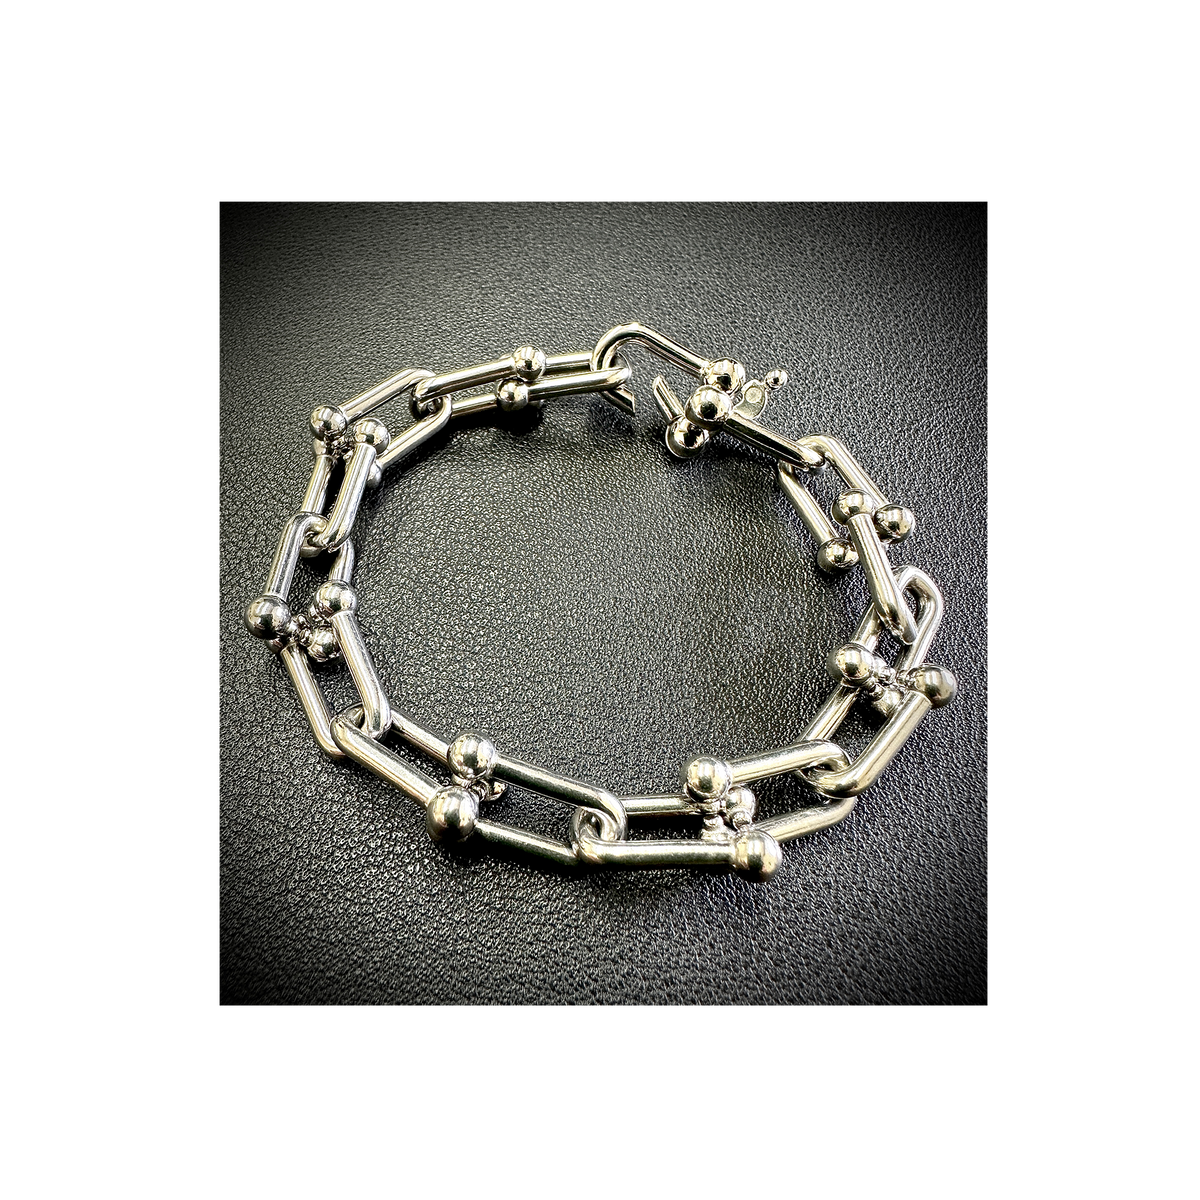 BG525W B.Tiff Horseshoe Link Chain Bracelet by B.Tiff New York (Retail)